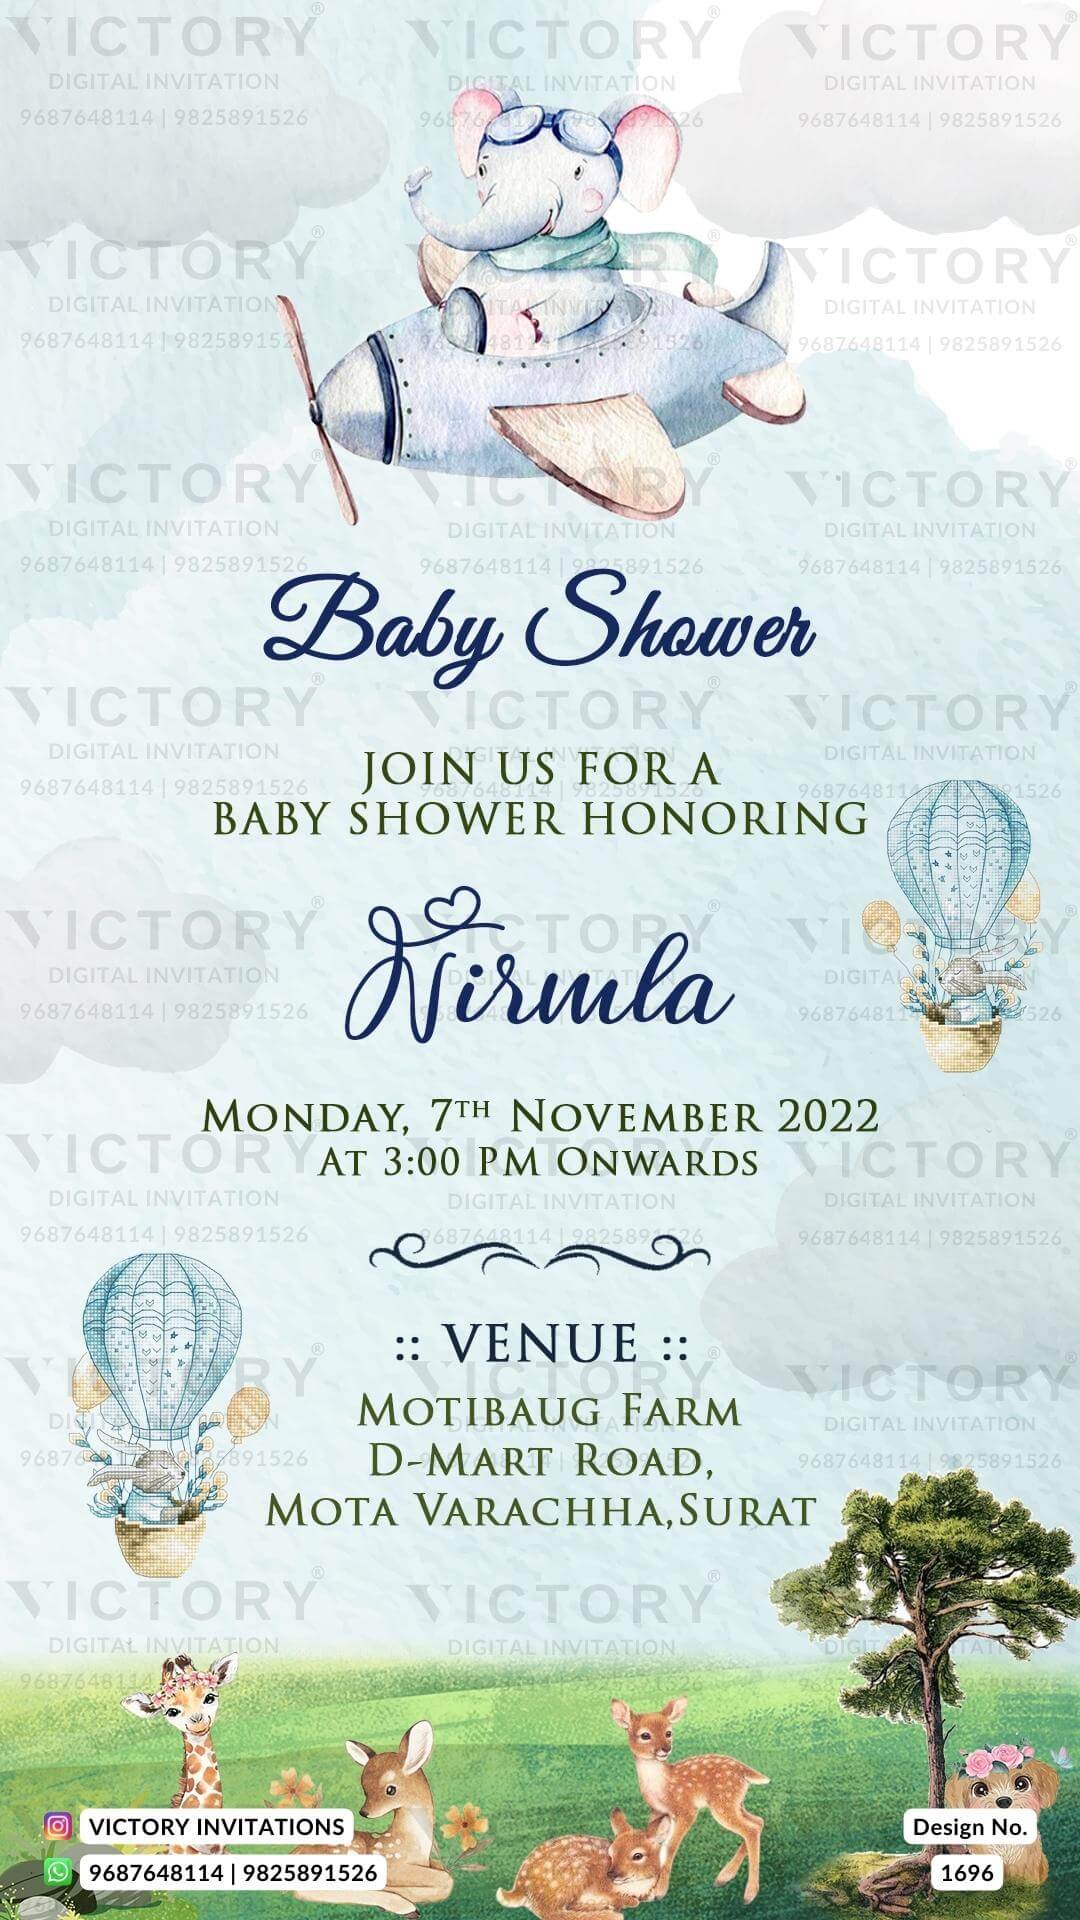 Baby Shower digital invitation card in english design no.1696